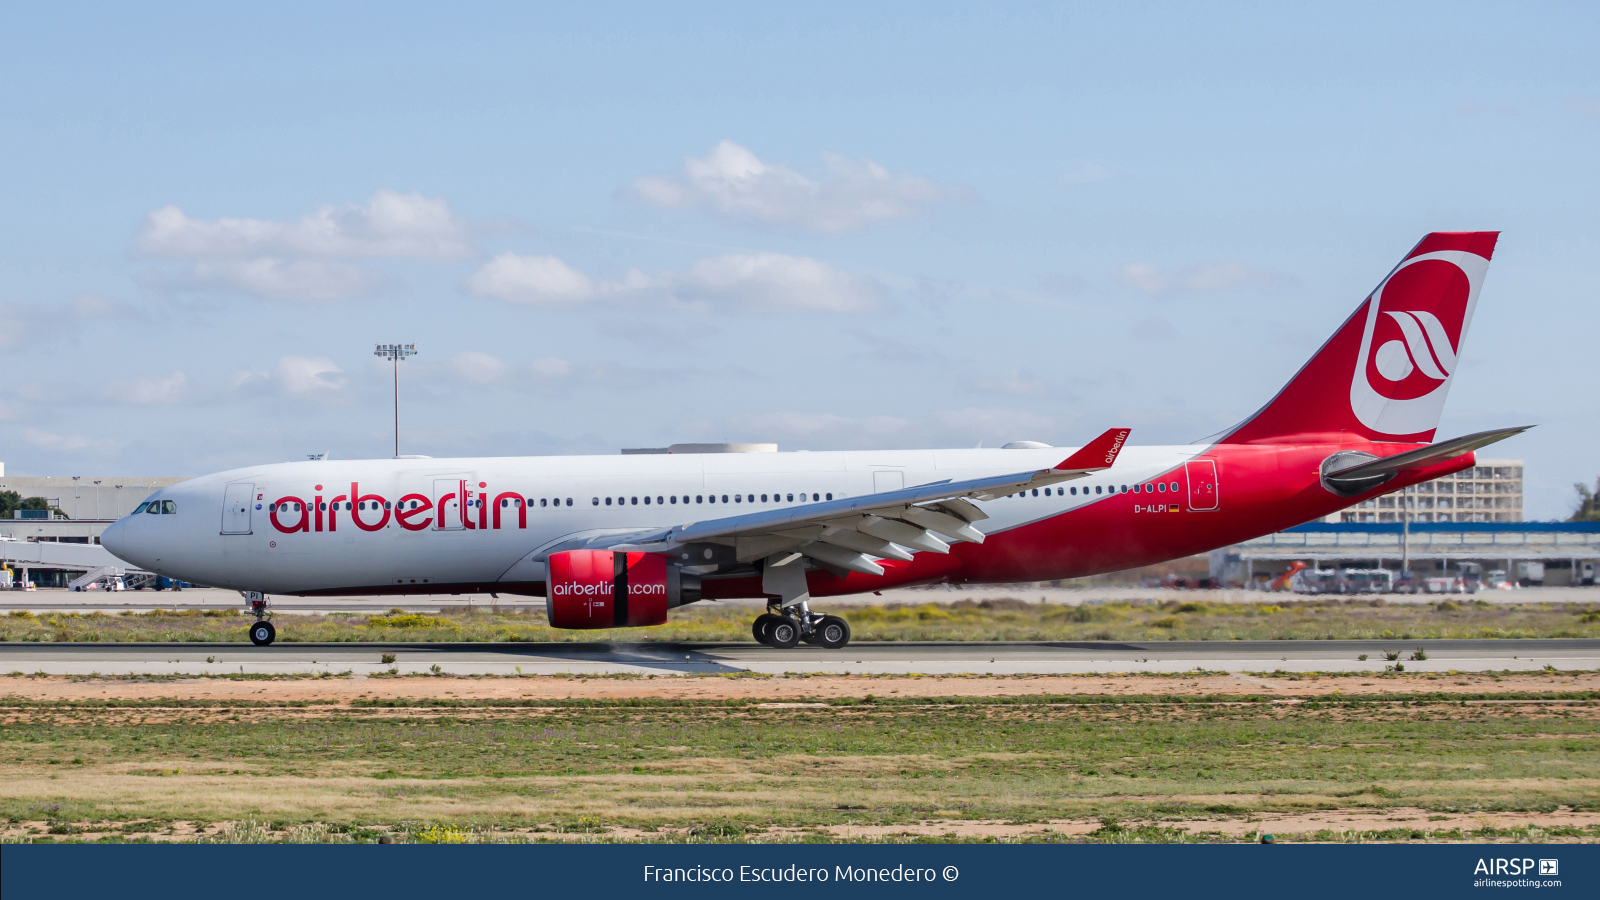 Air Berlin  Airbus A330-200  D-ALPI